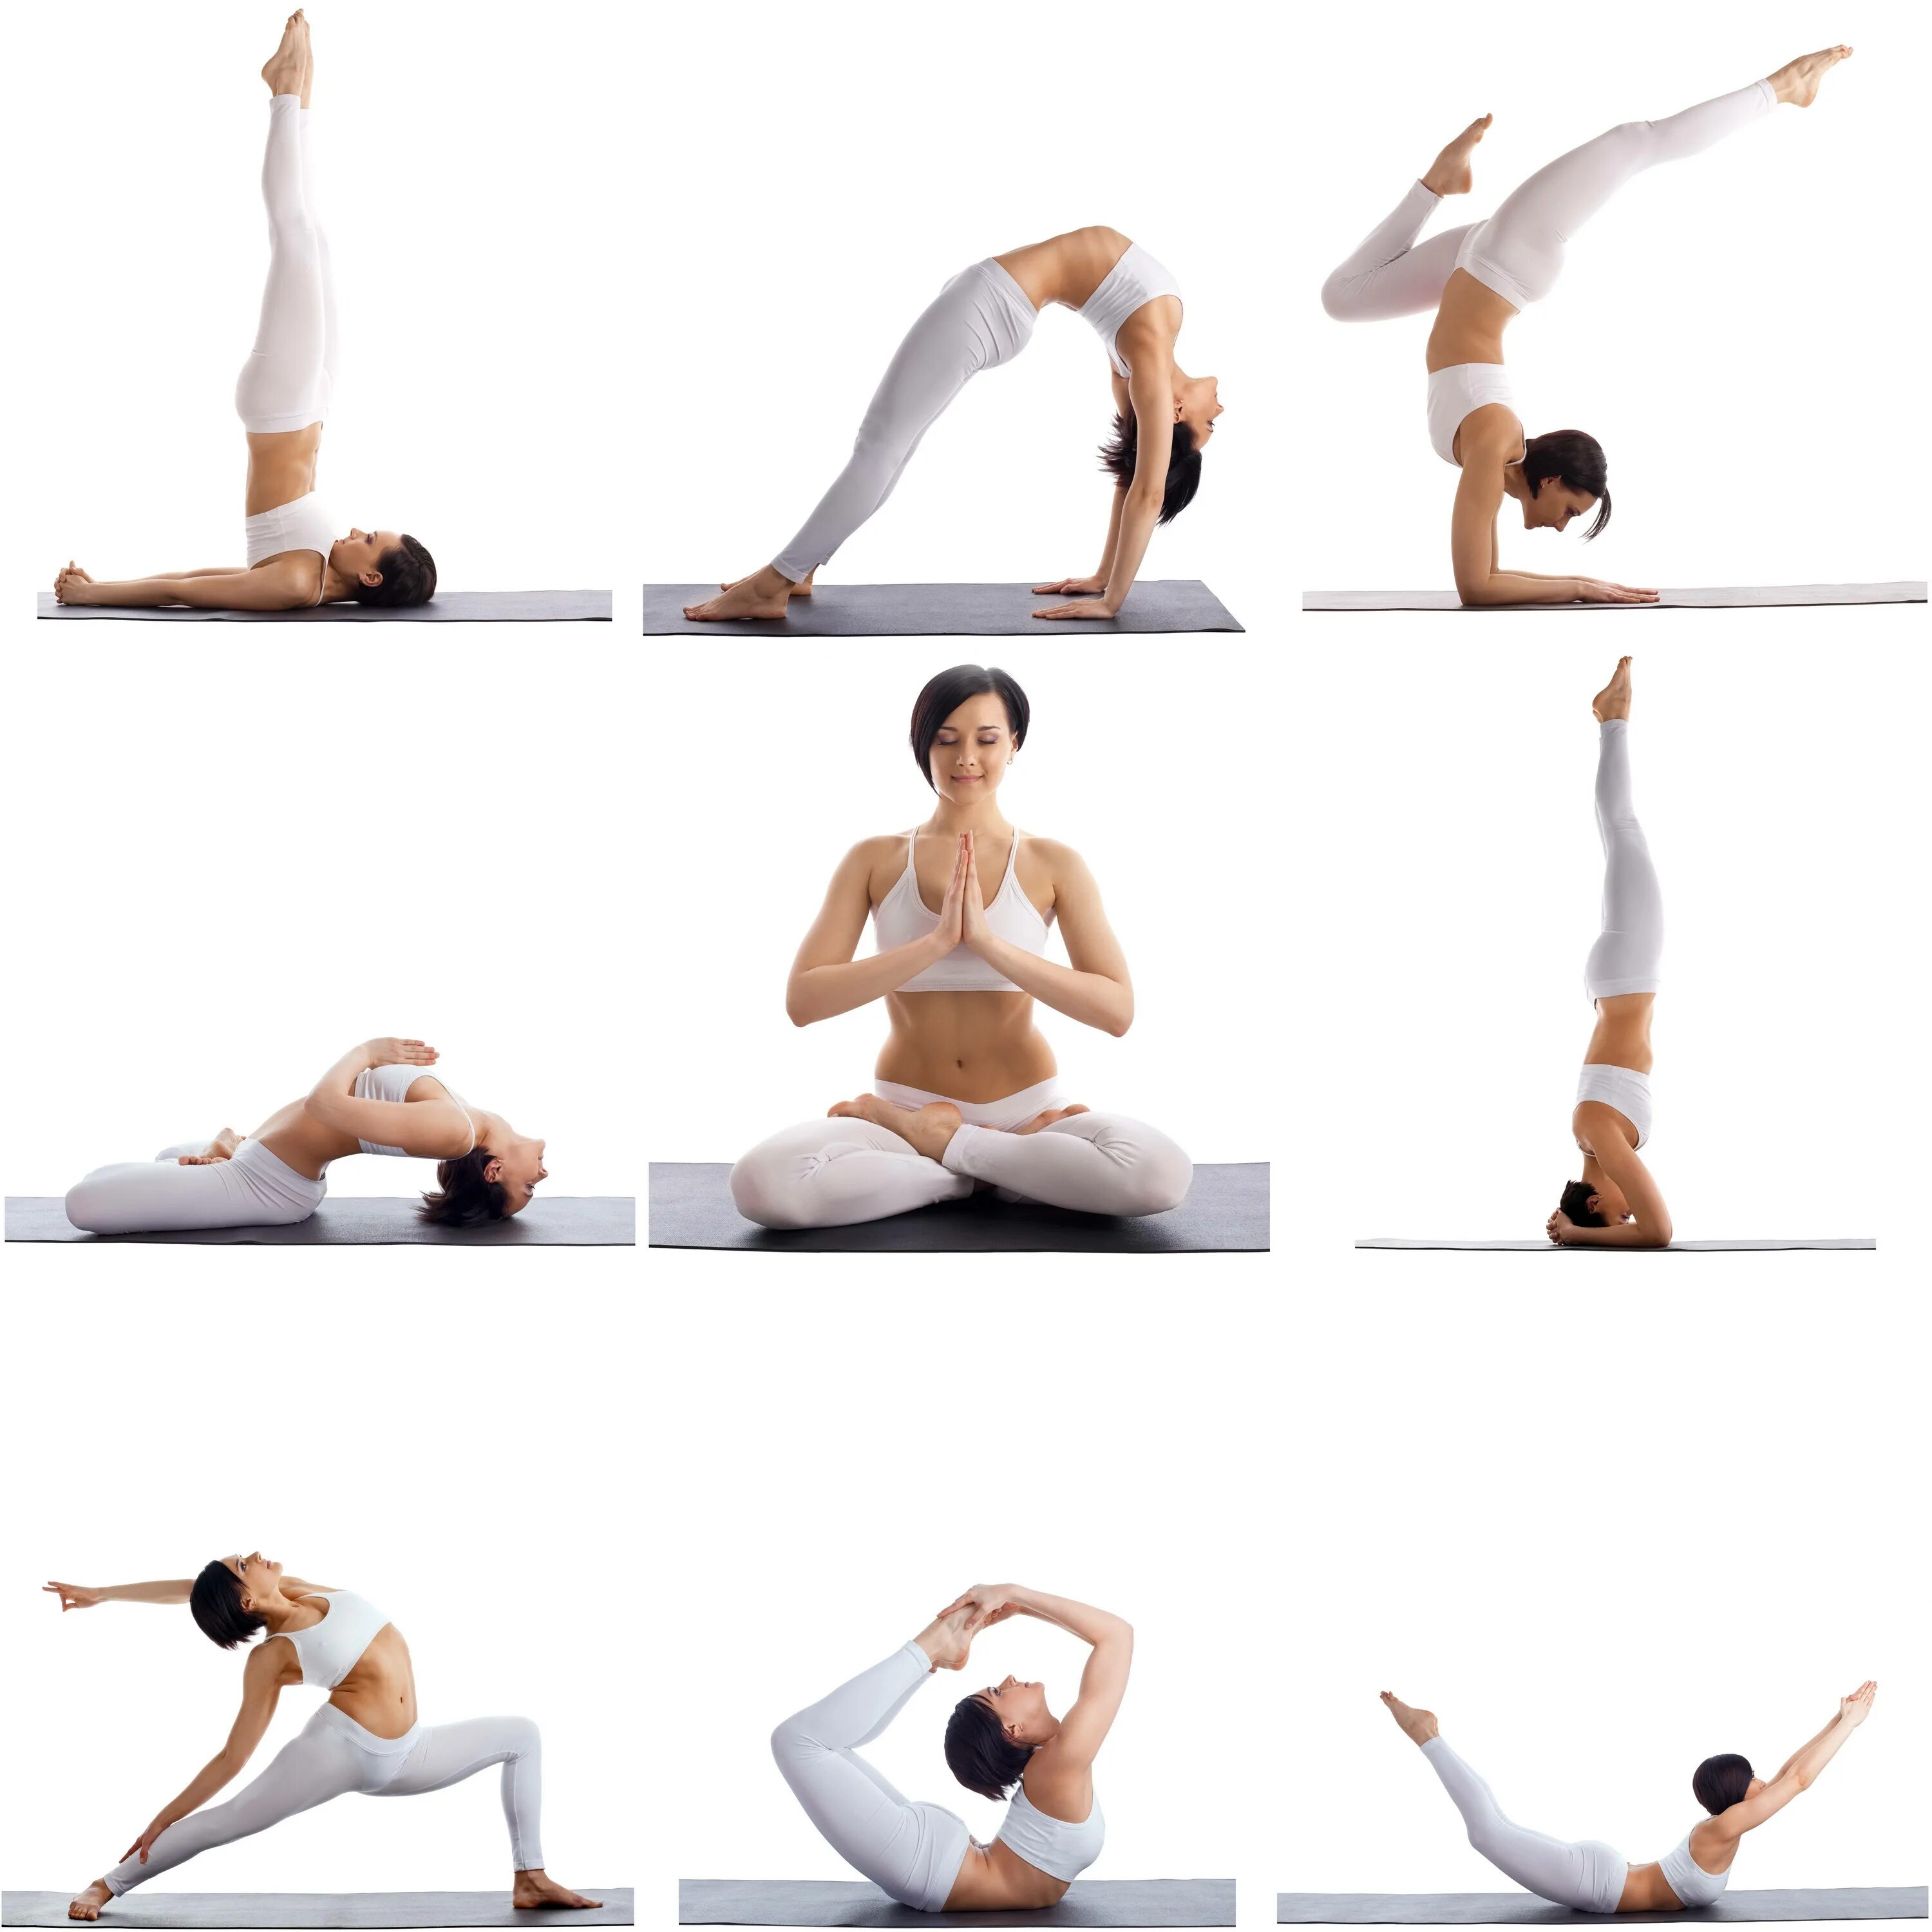 Основные асаны хатха йоги для начинающих. Хатха-йога комплекс асан. Хатха йога упражнения для начинающих. Комплекс асан хатха йоги.